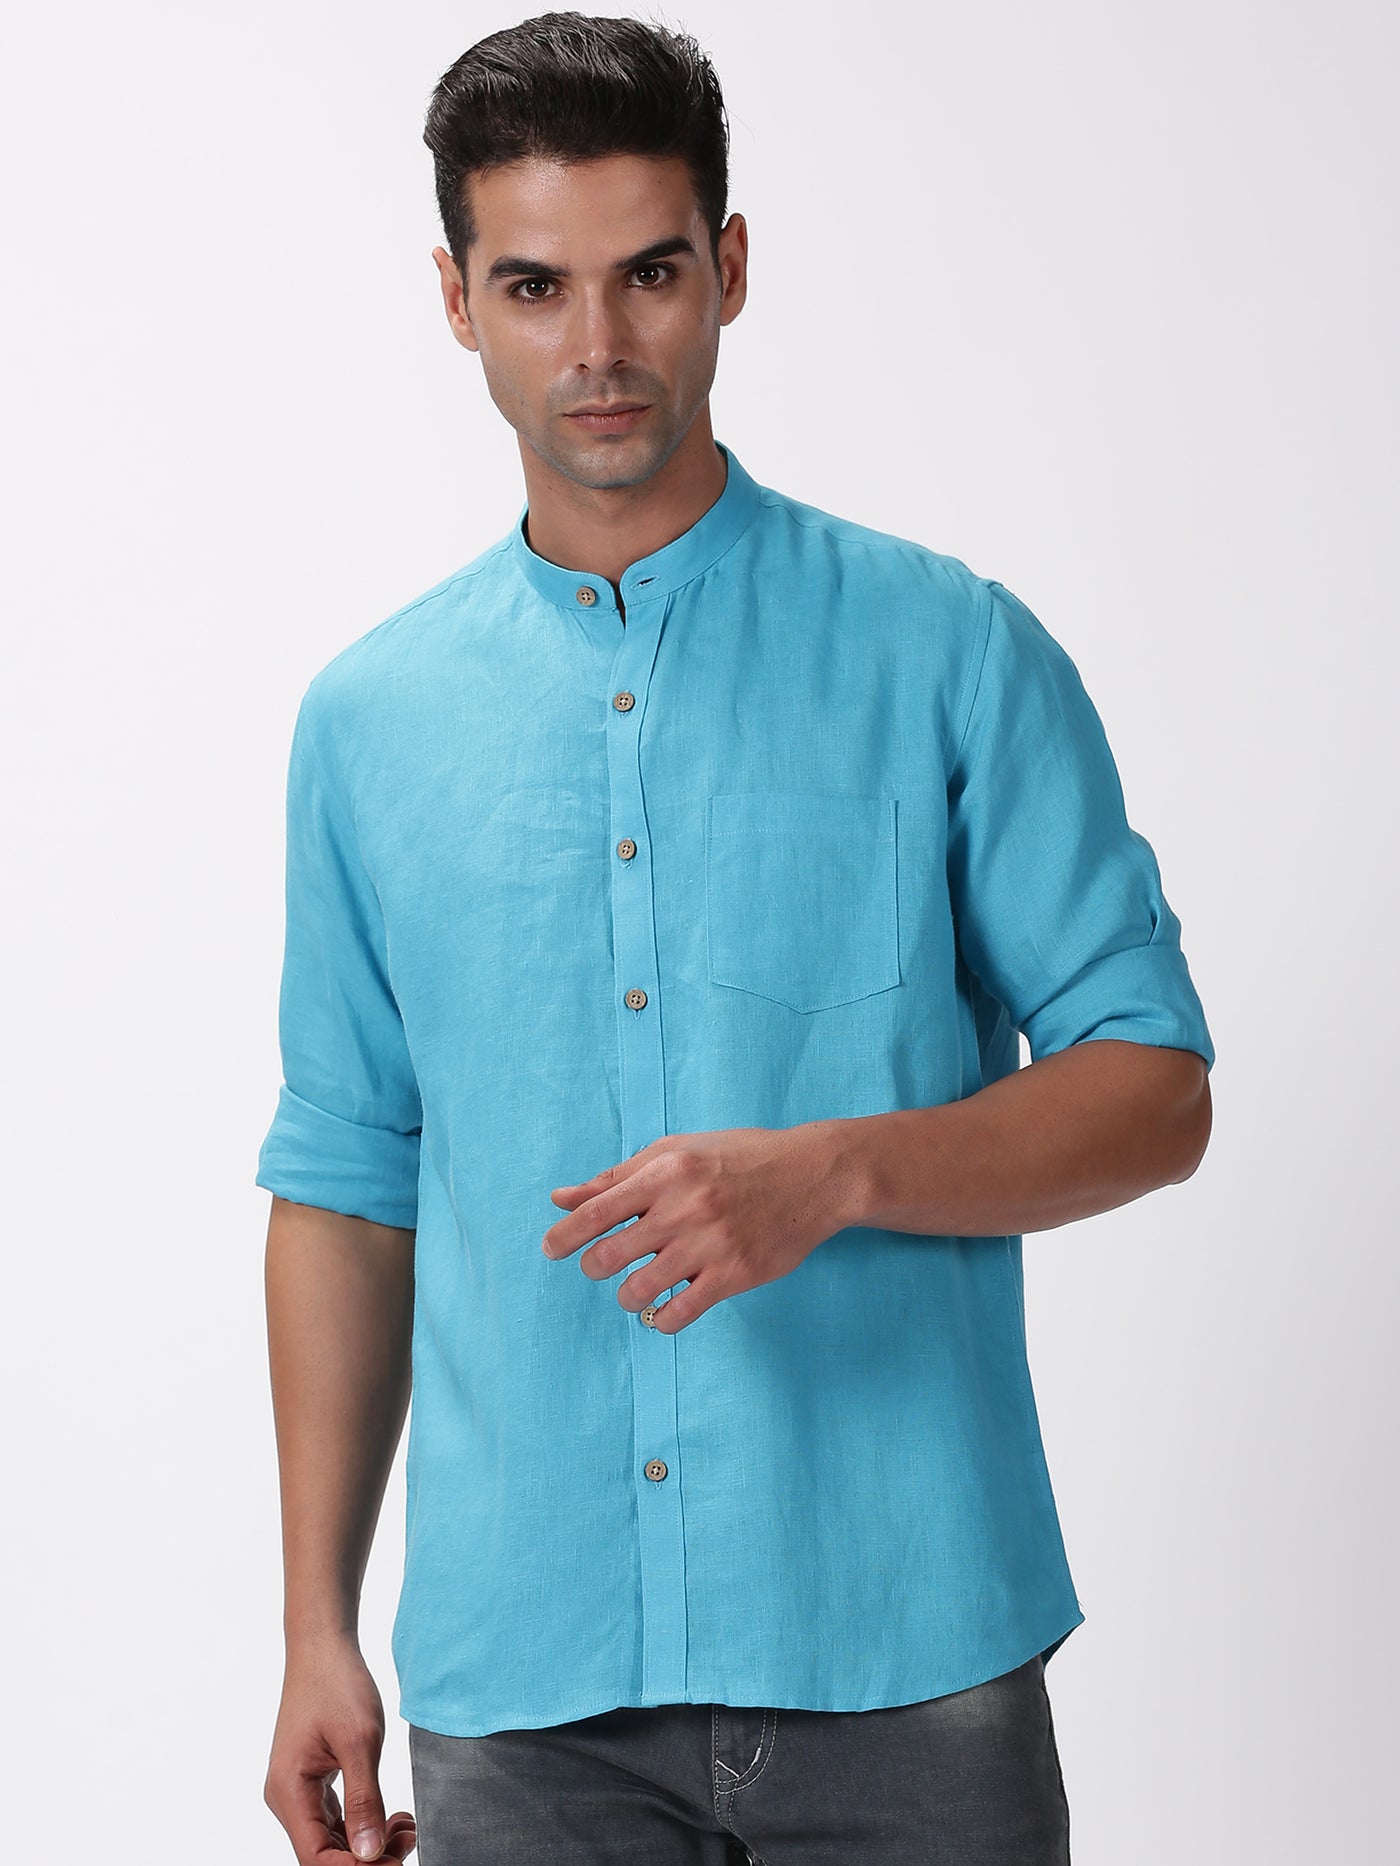 Enzo - Pure Linen Mandarin Collar Full Sleeve Shirt - Aqua Blue